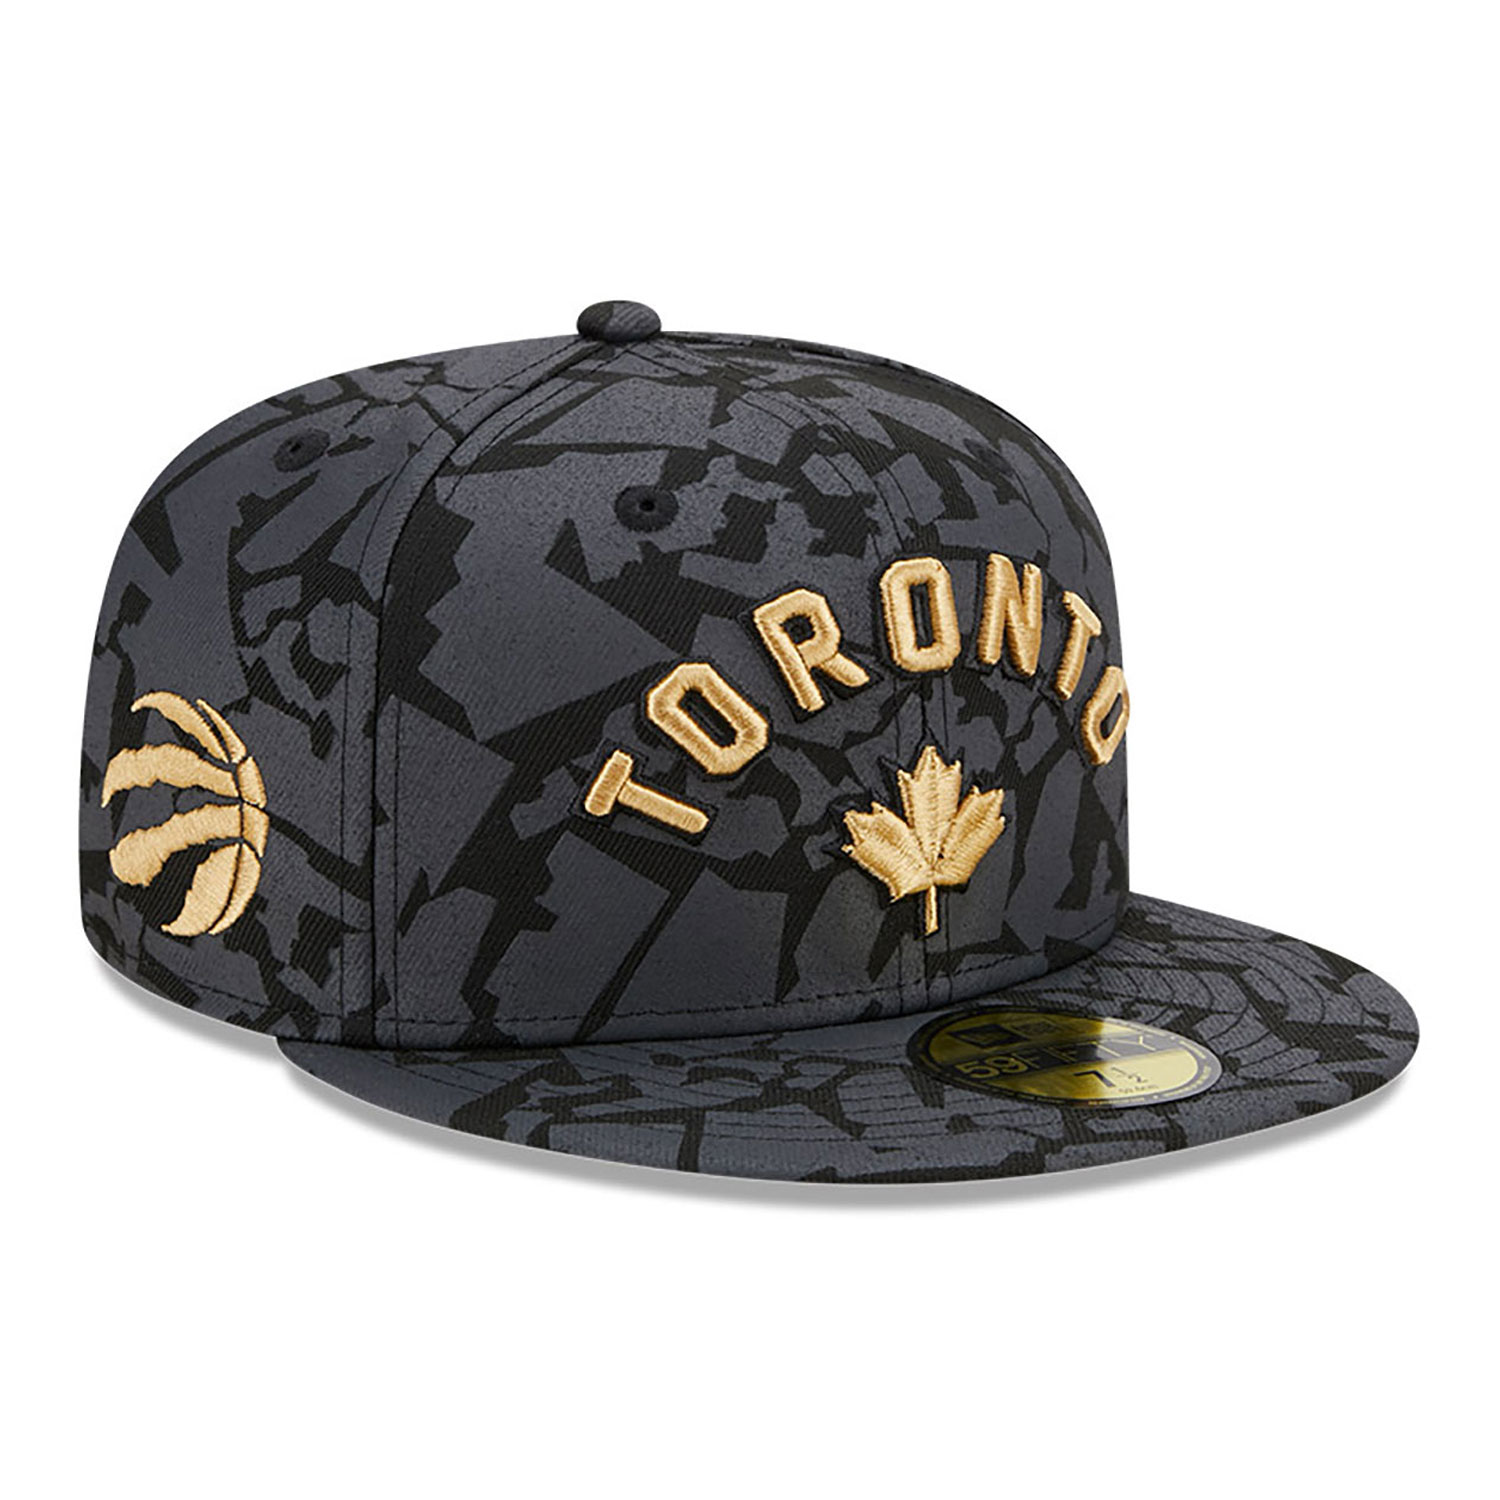 Toronto Raptors Authentics City Edition Black 59FIFTY Fitted Cap